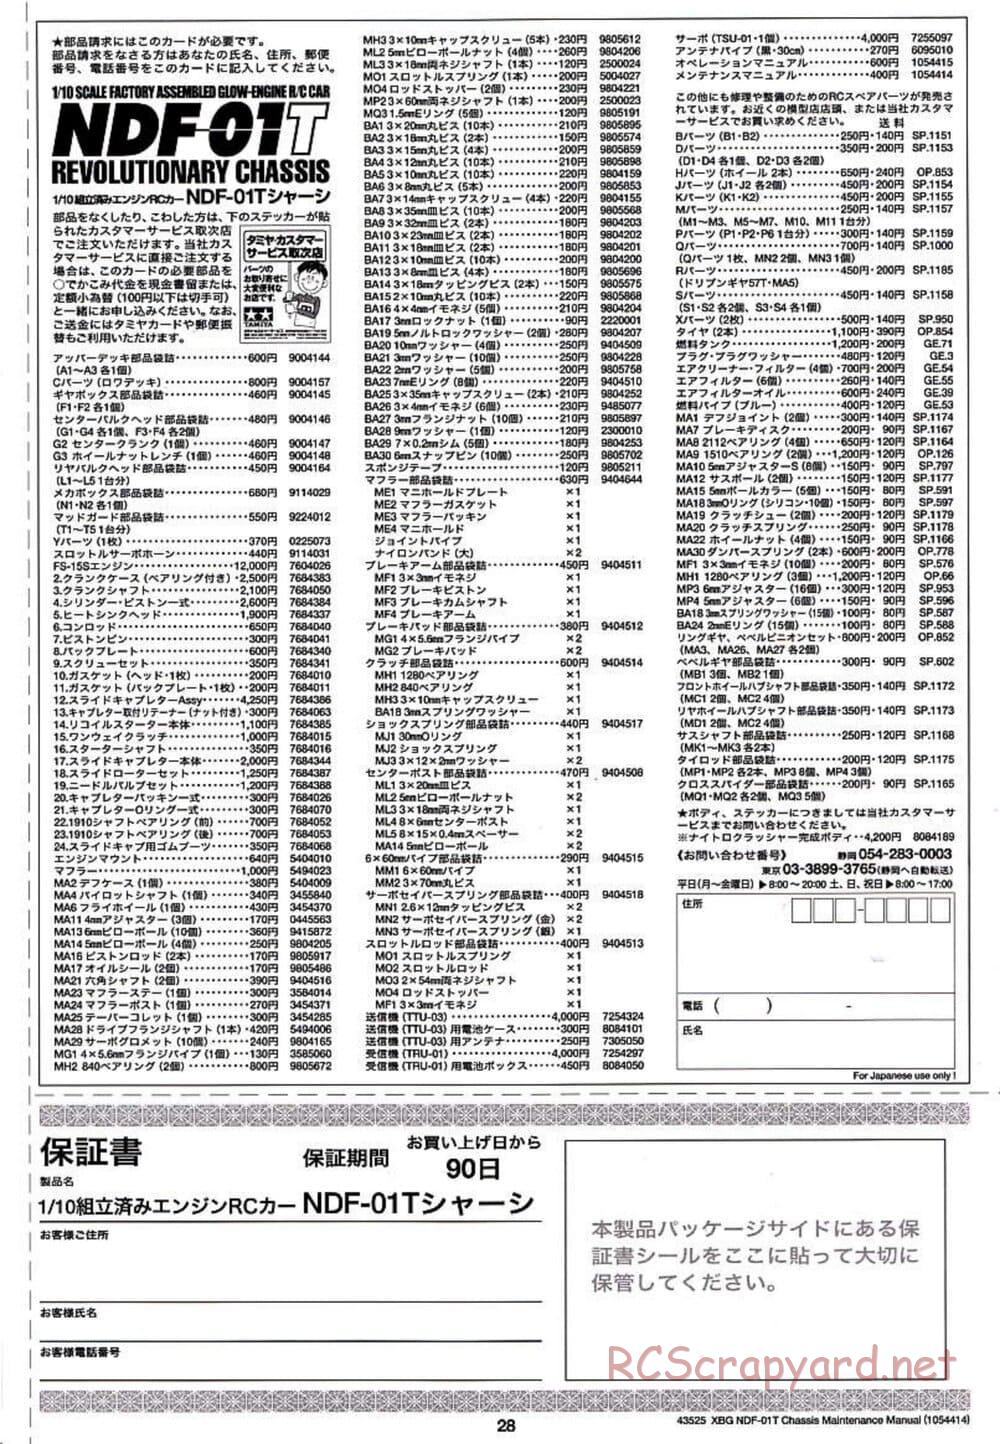 Tamiya - Nitro Crusher - NDF-01T - Maintenance Manual - Page 28